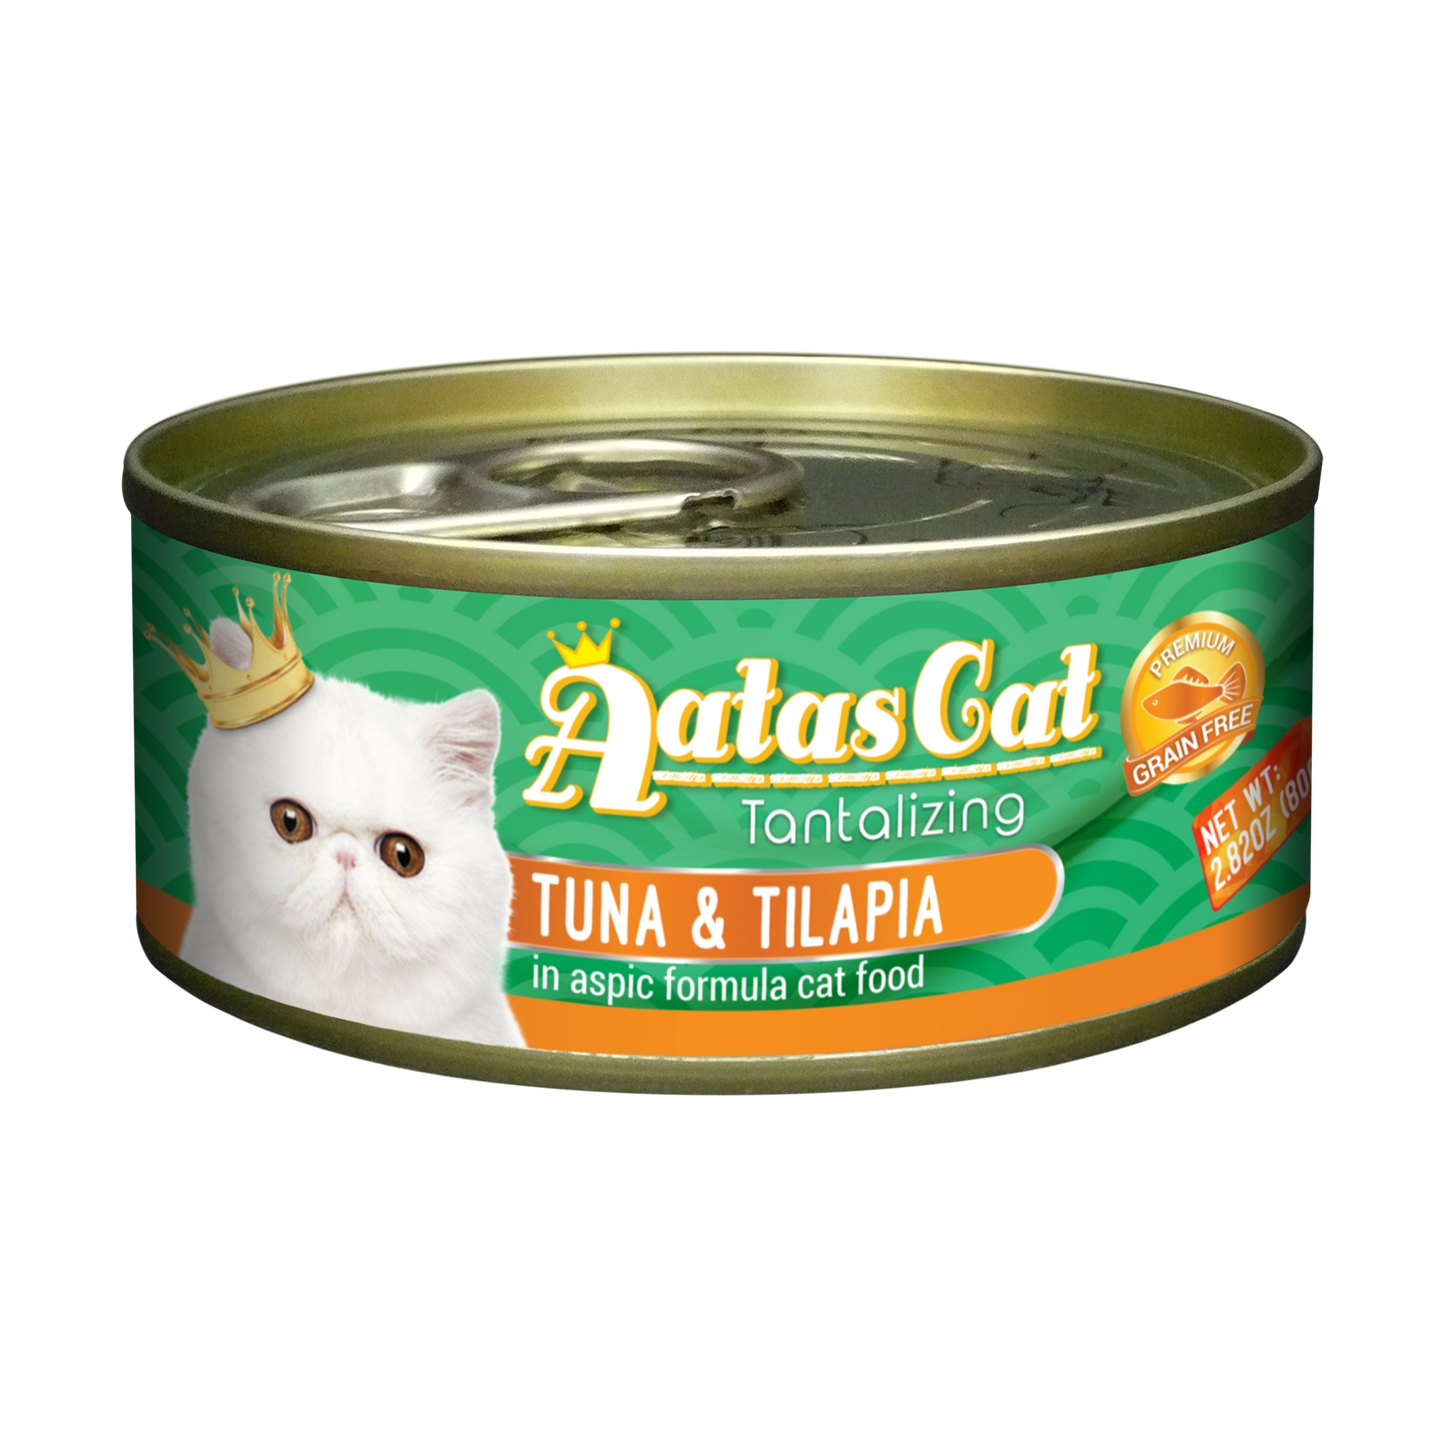 Aatas Cat Tantalizing Tuna & Tilapia Cat Canned Food 80g